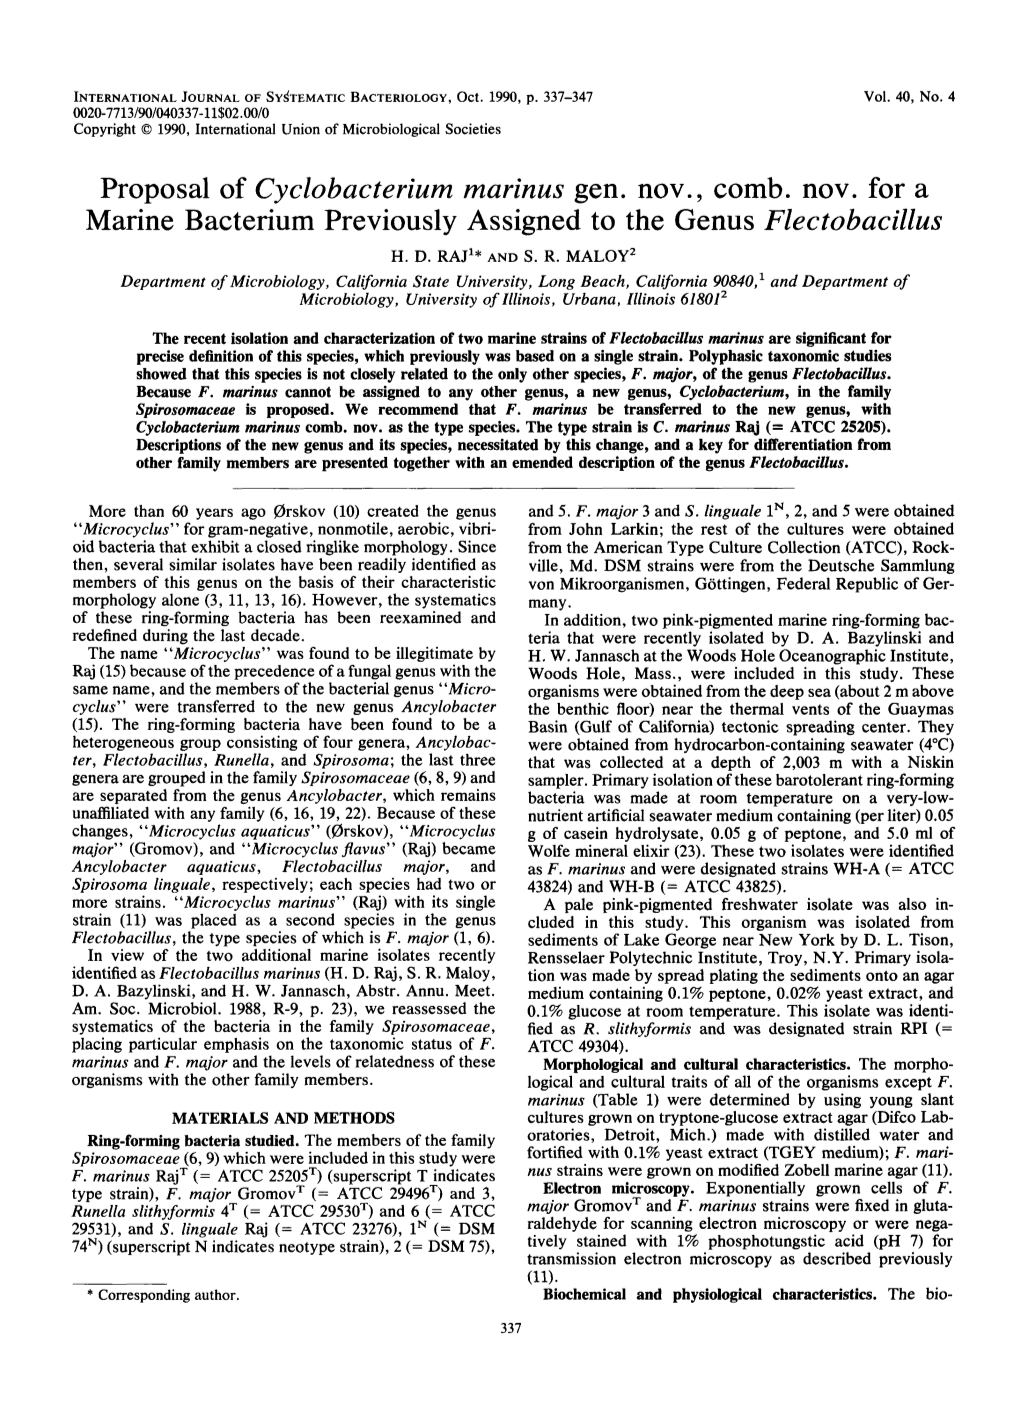 Proposal of Cyclobacterium Marinus Gen. Nov., Comb. Nov. for a Marine Bacterium Previously Assigned to the Genus Flectobacillus